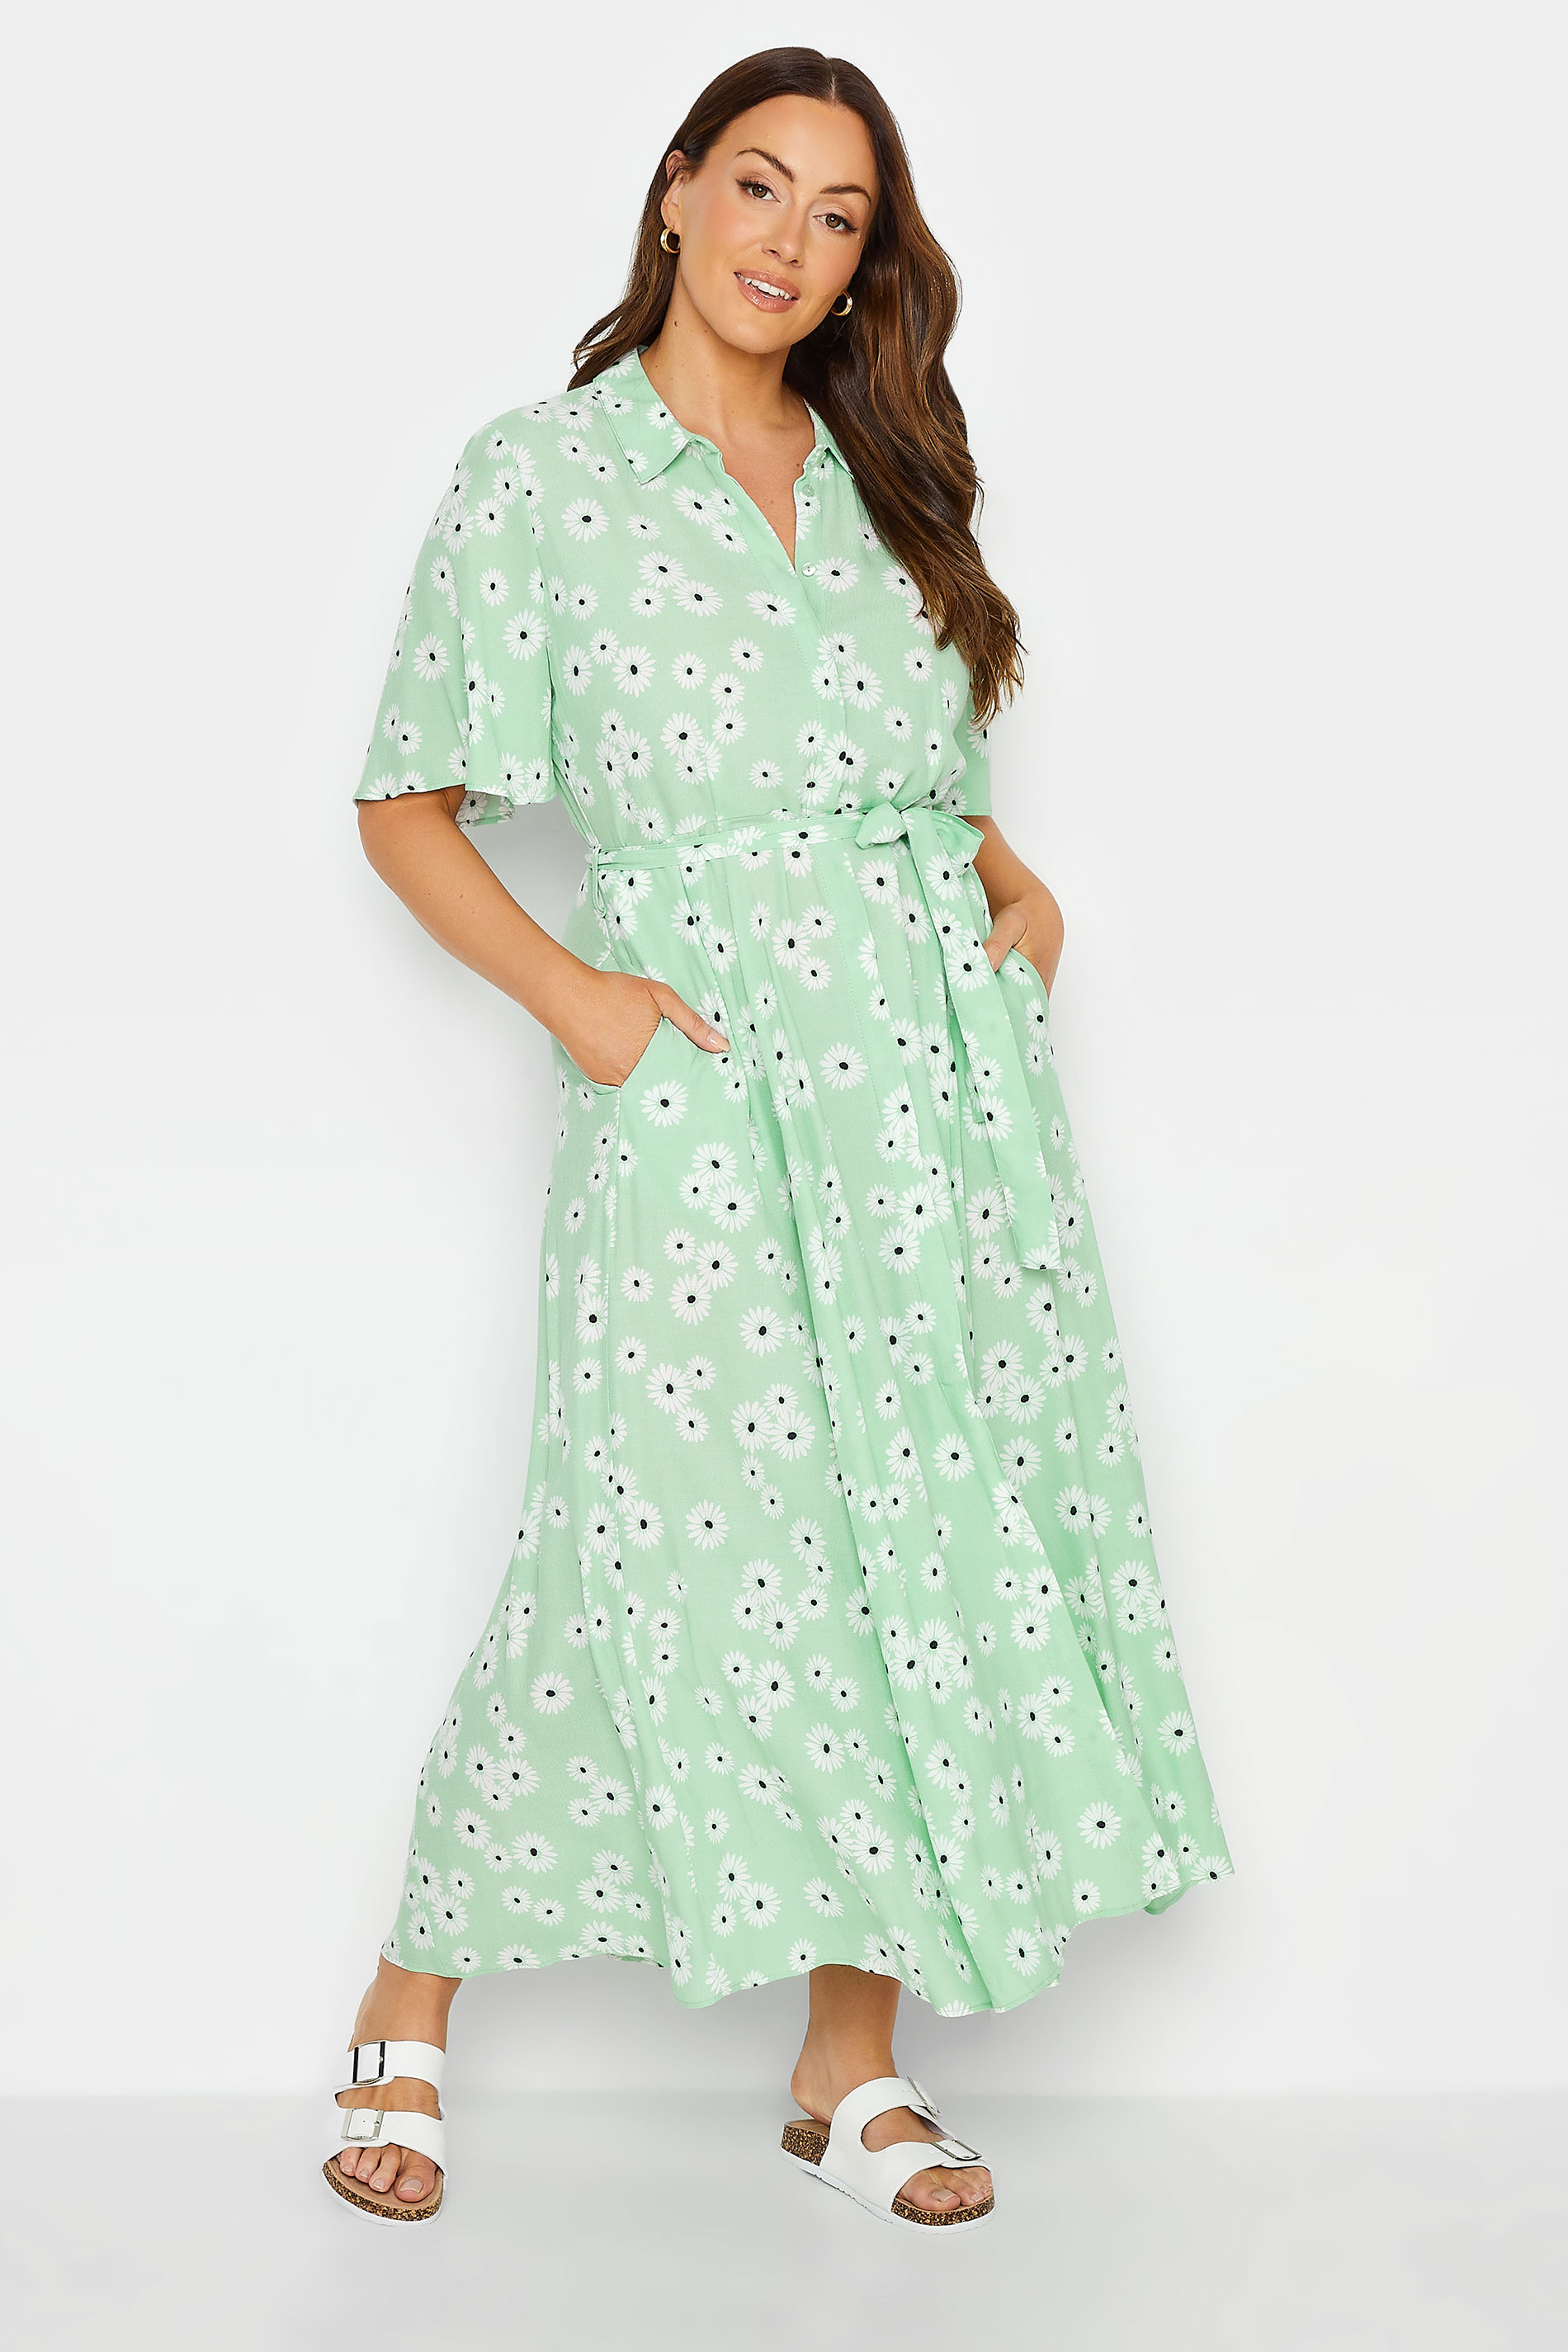 M&Co Mint Green Daisy Print Maxi Shirt Dress | M&Co 1